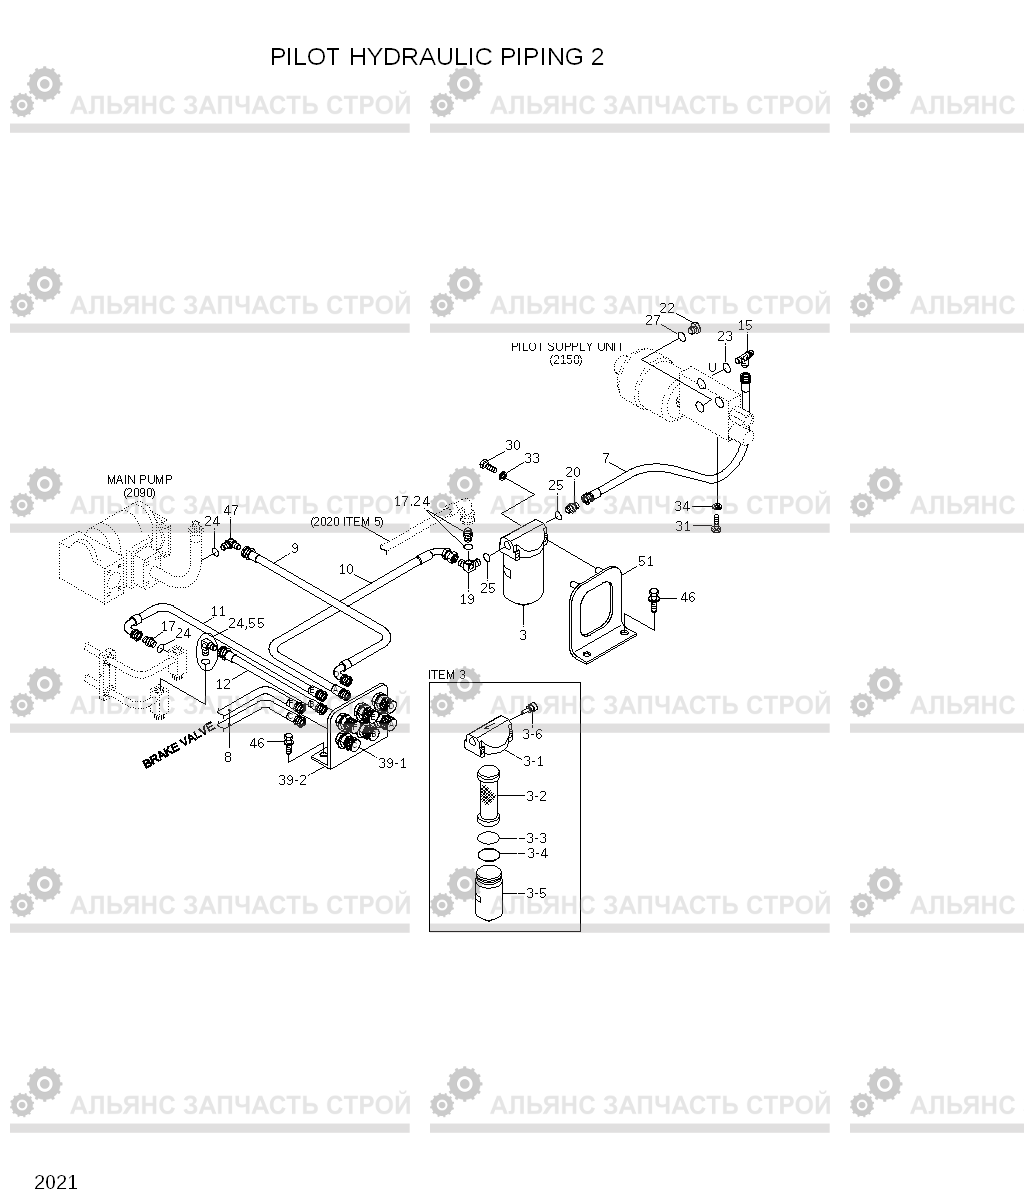 2021 PILOT HYDRAULIC PIPING 2 HL740TM-3(#0251-), Hyundai